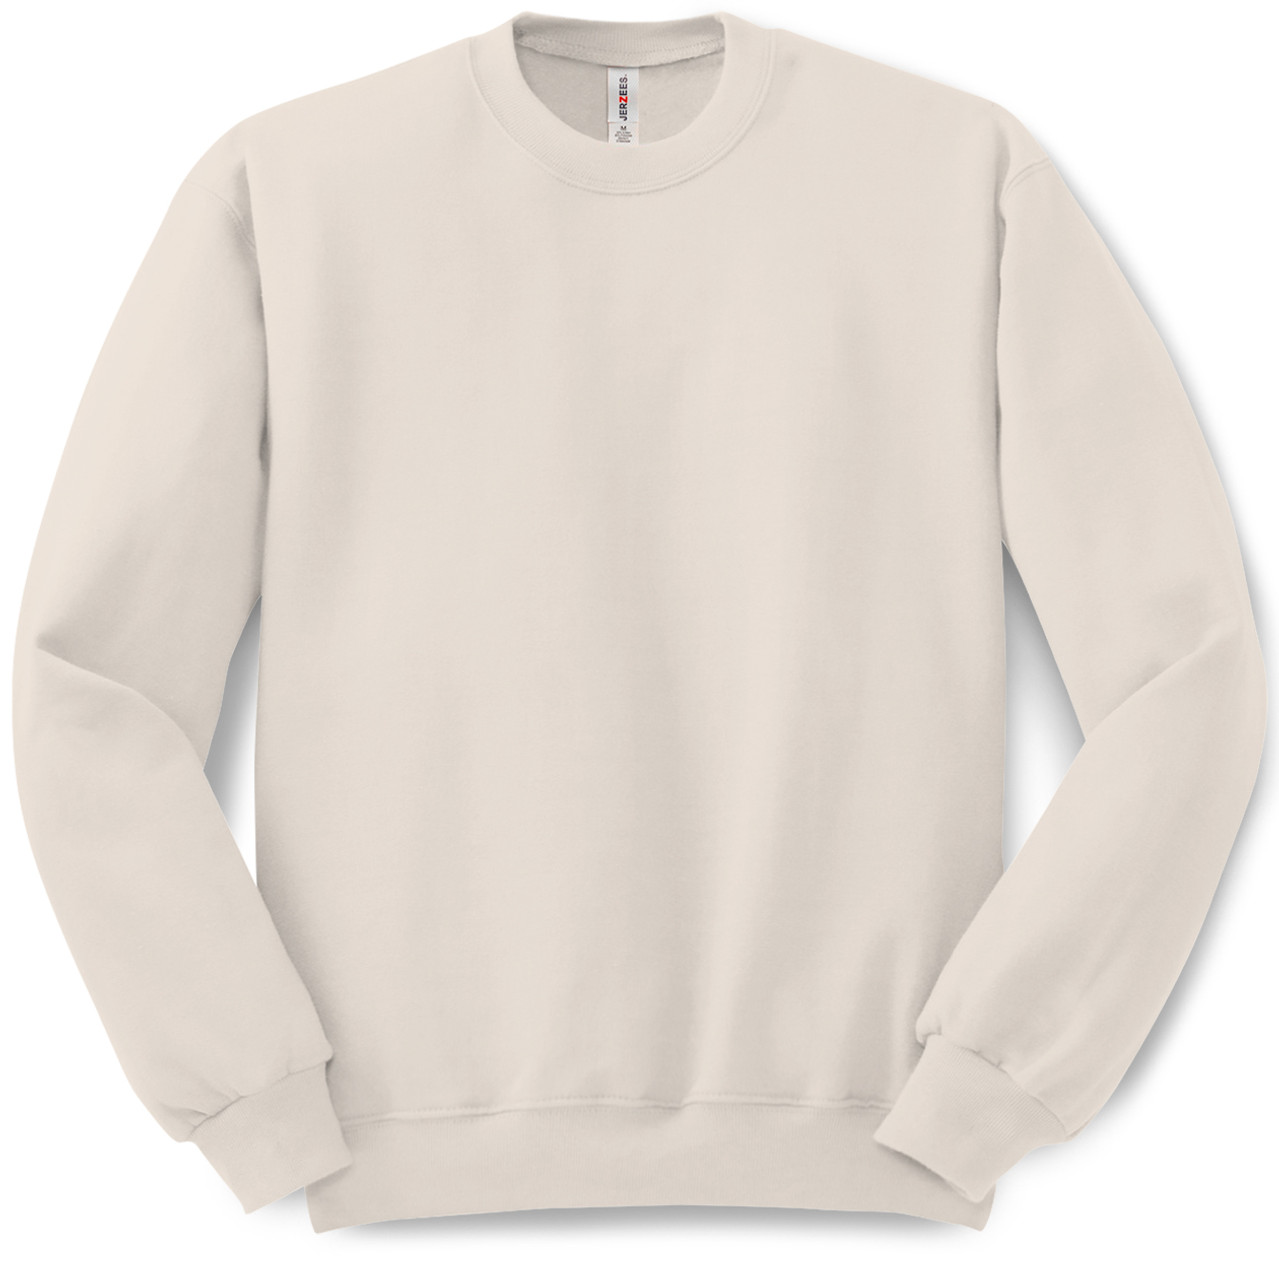 Plain Pullover Crew Neck Sweatshirt (Sweet Cream)